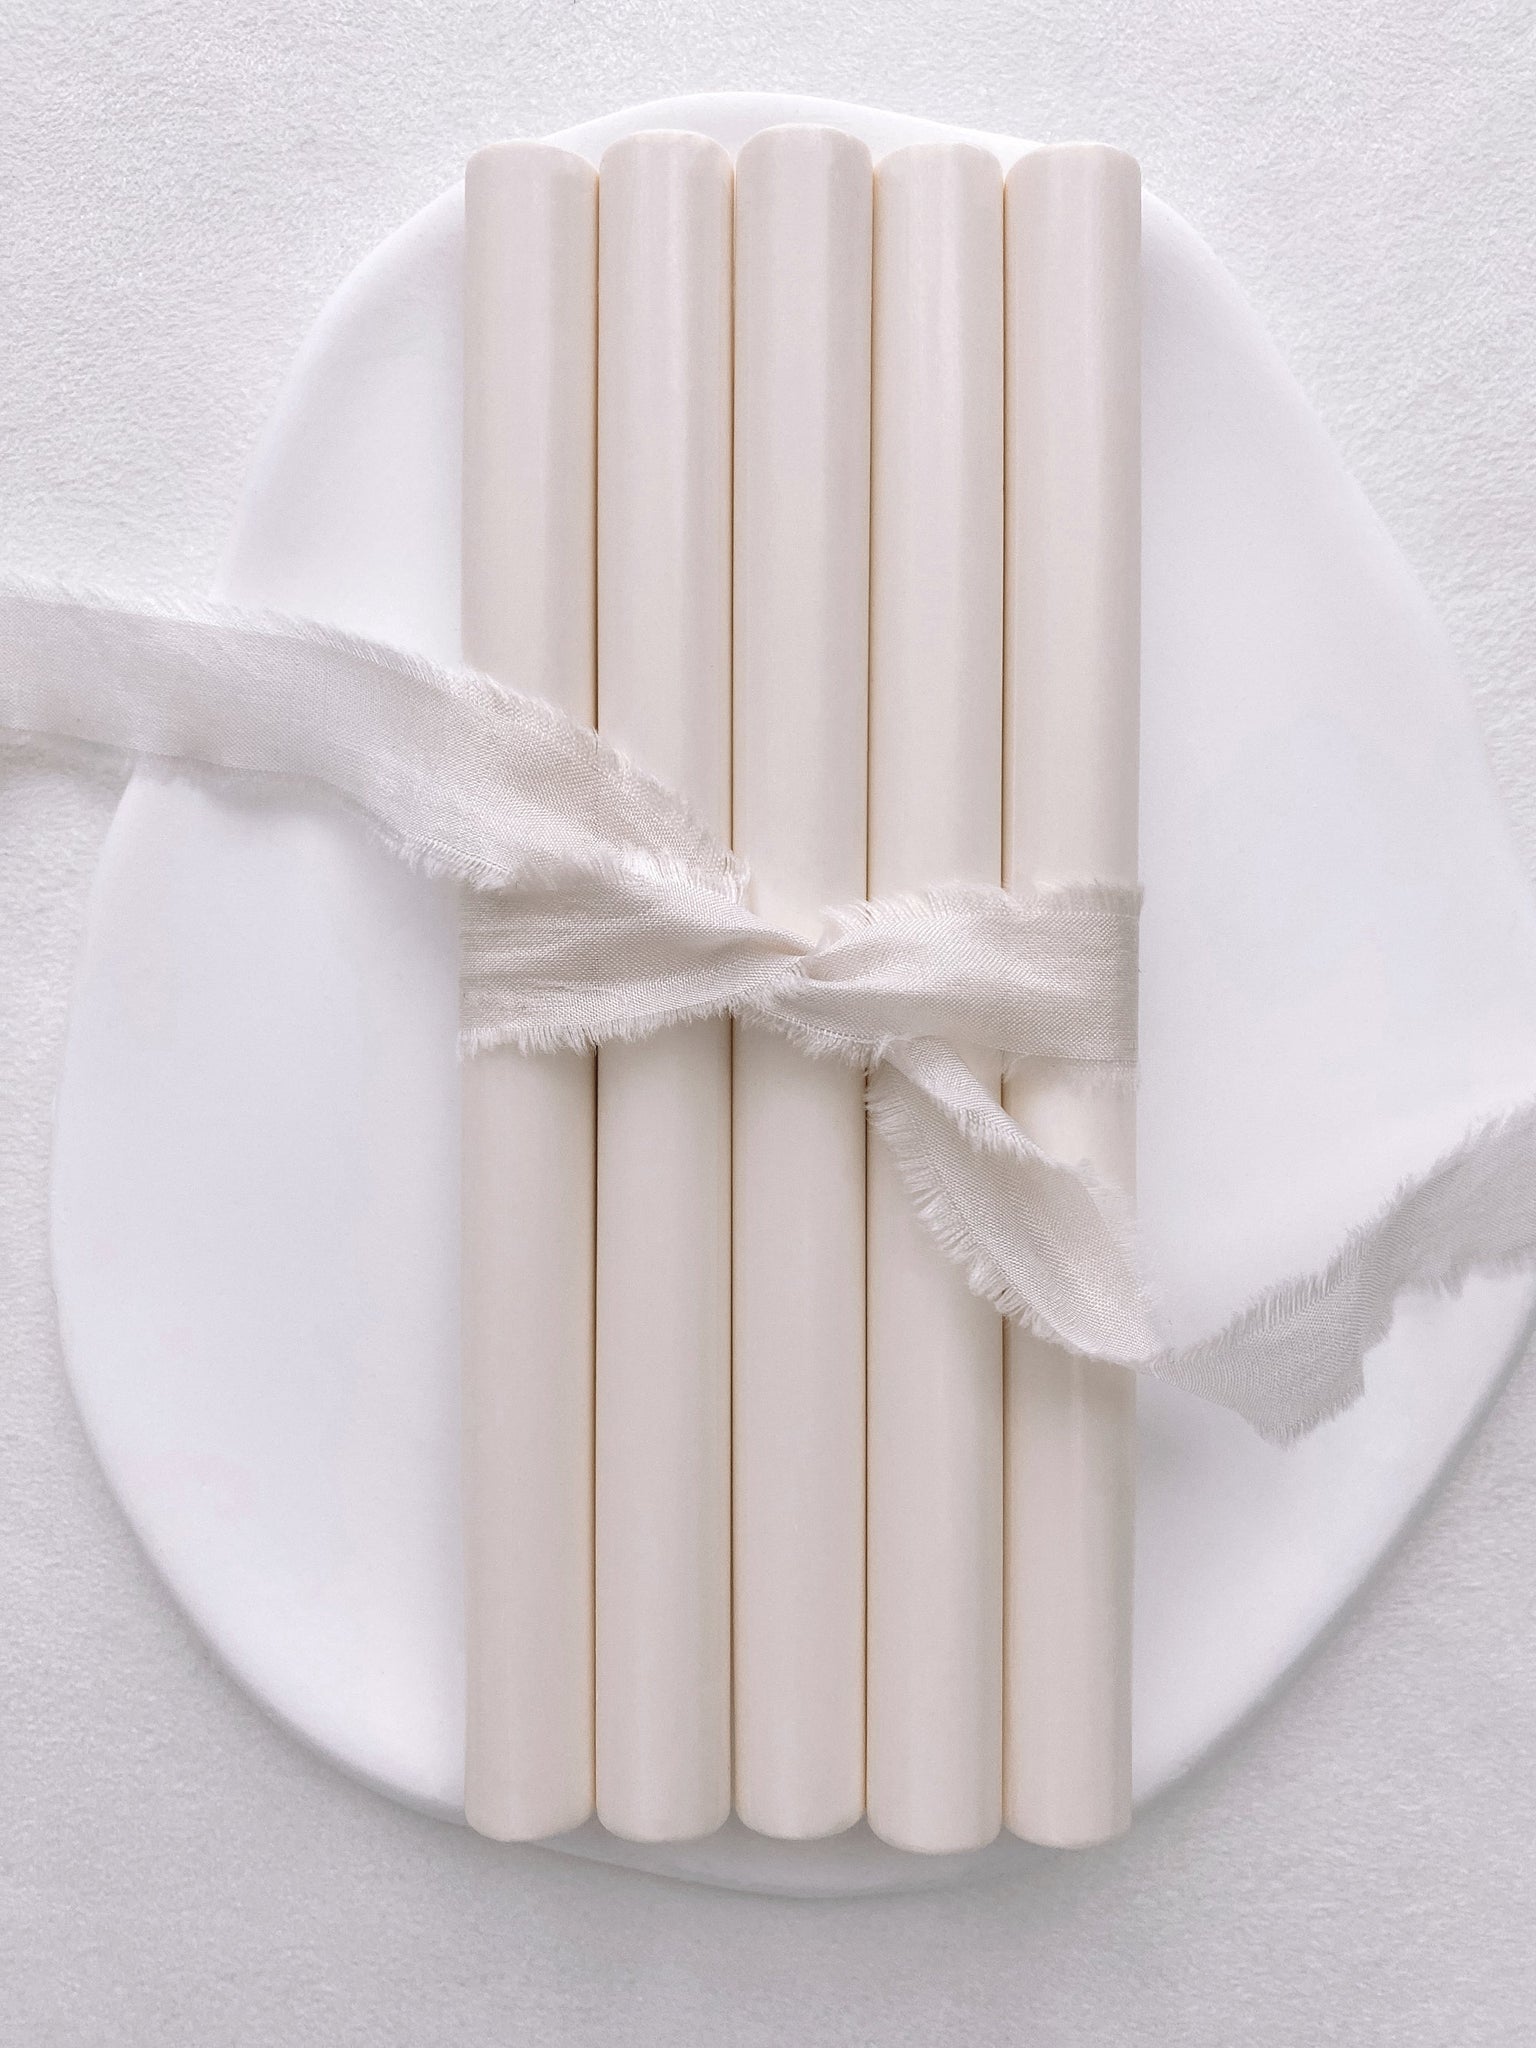 A set of 5 off white sealing wax sticks